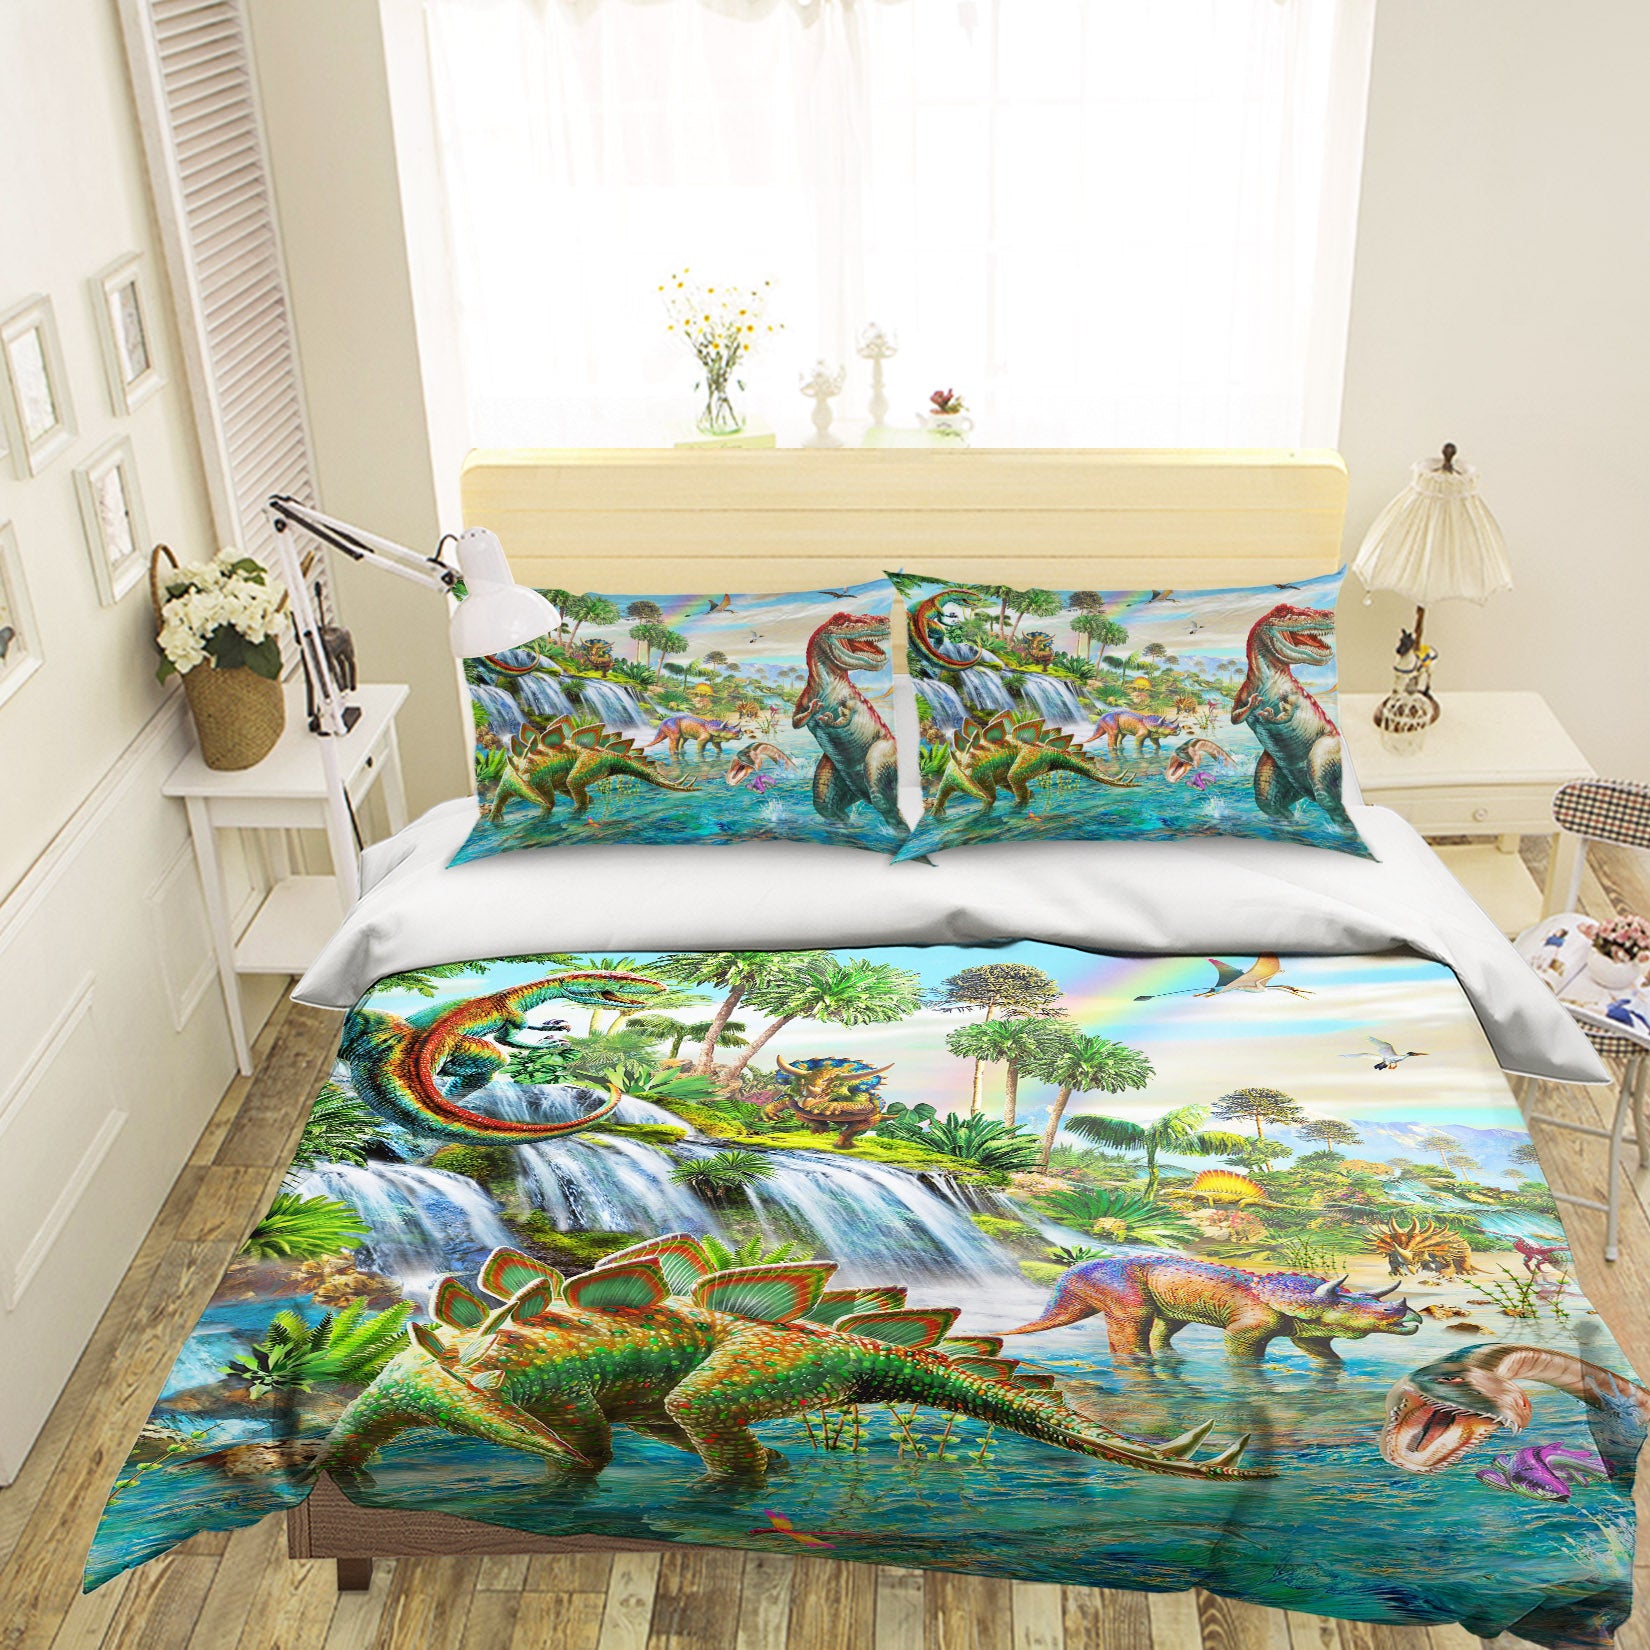 3D Dinosaur Falls 2043 Adrian Chesterman Bedding Bed Pillowcases Quilt